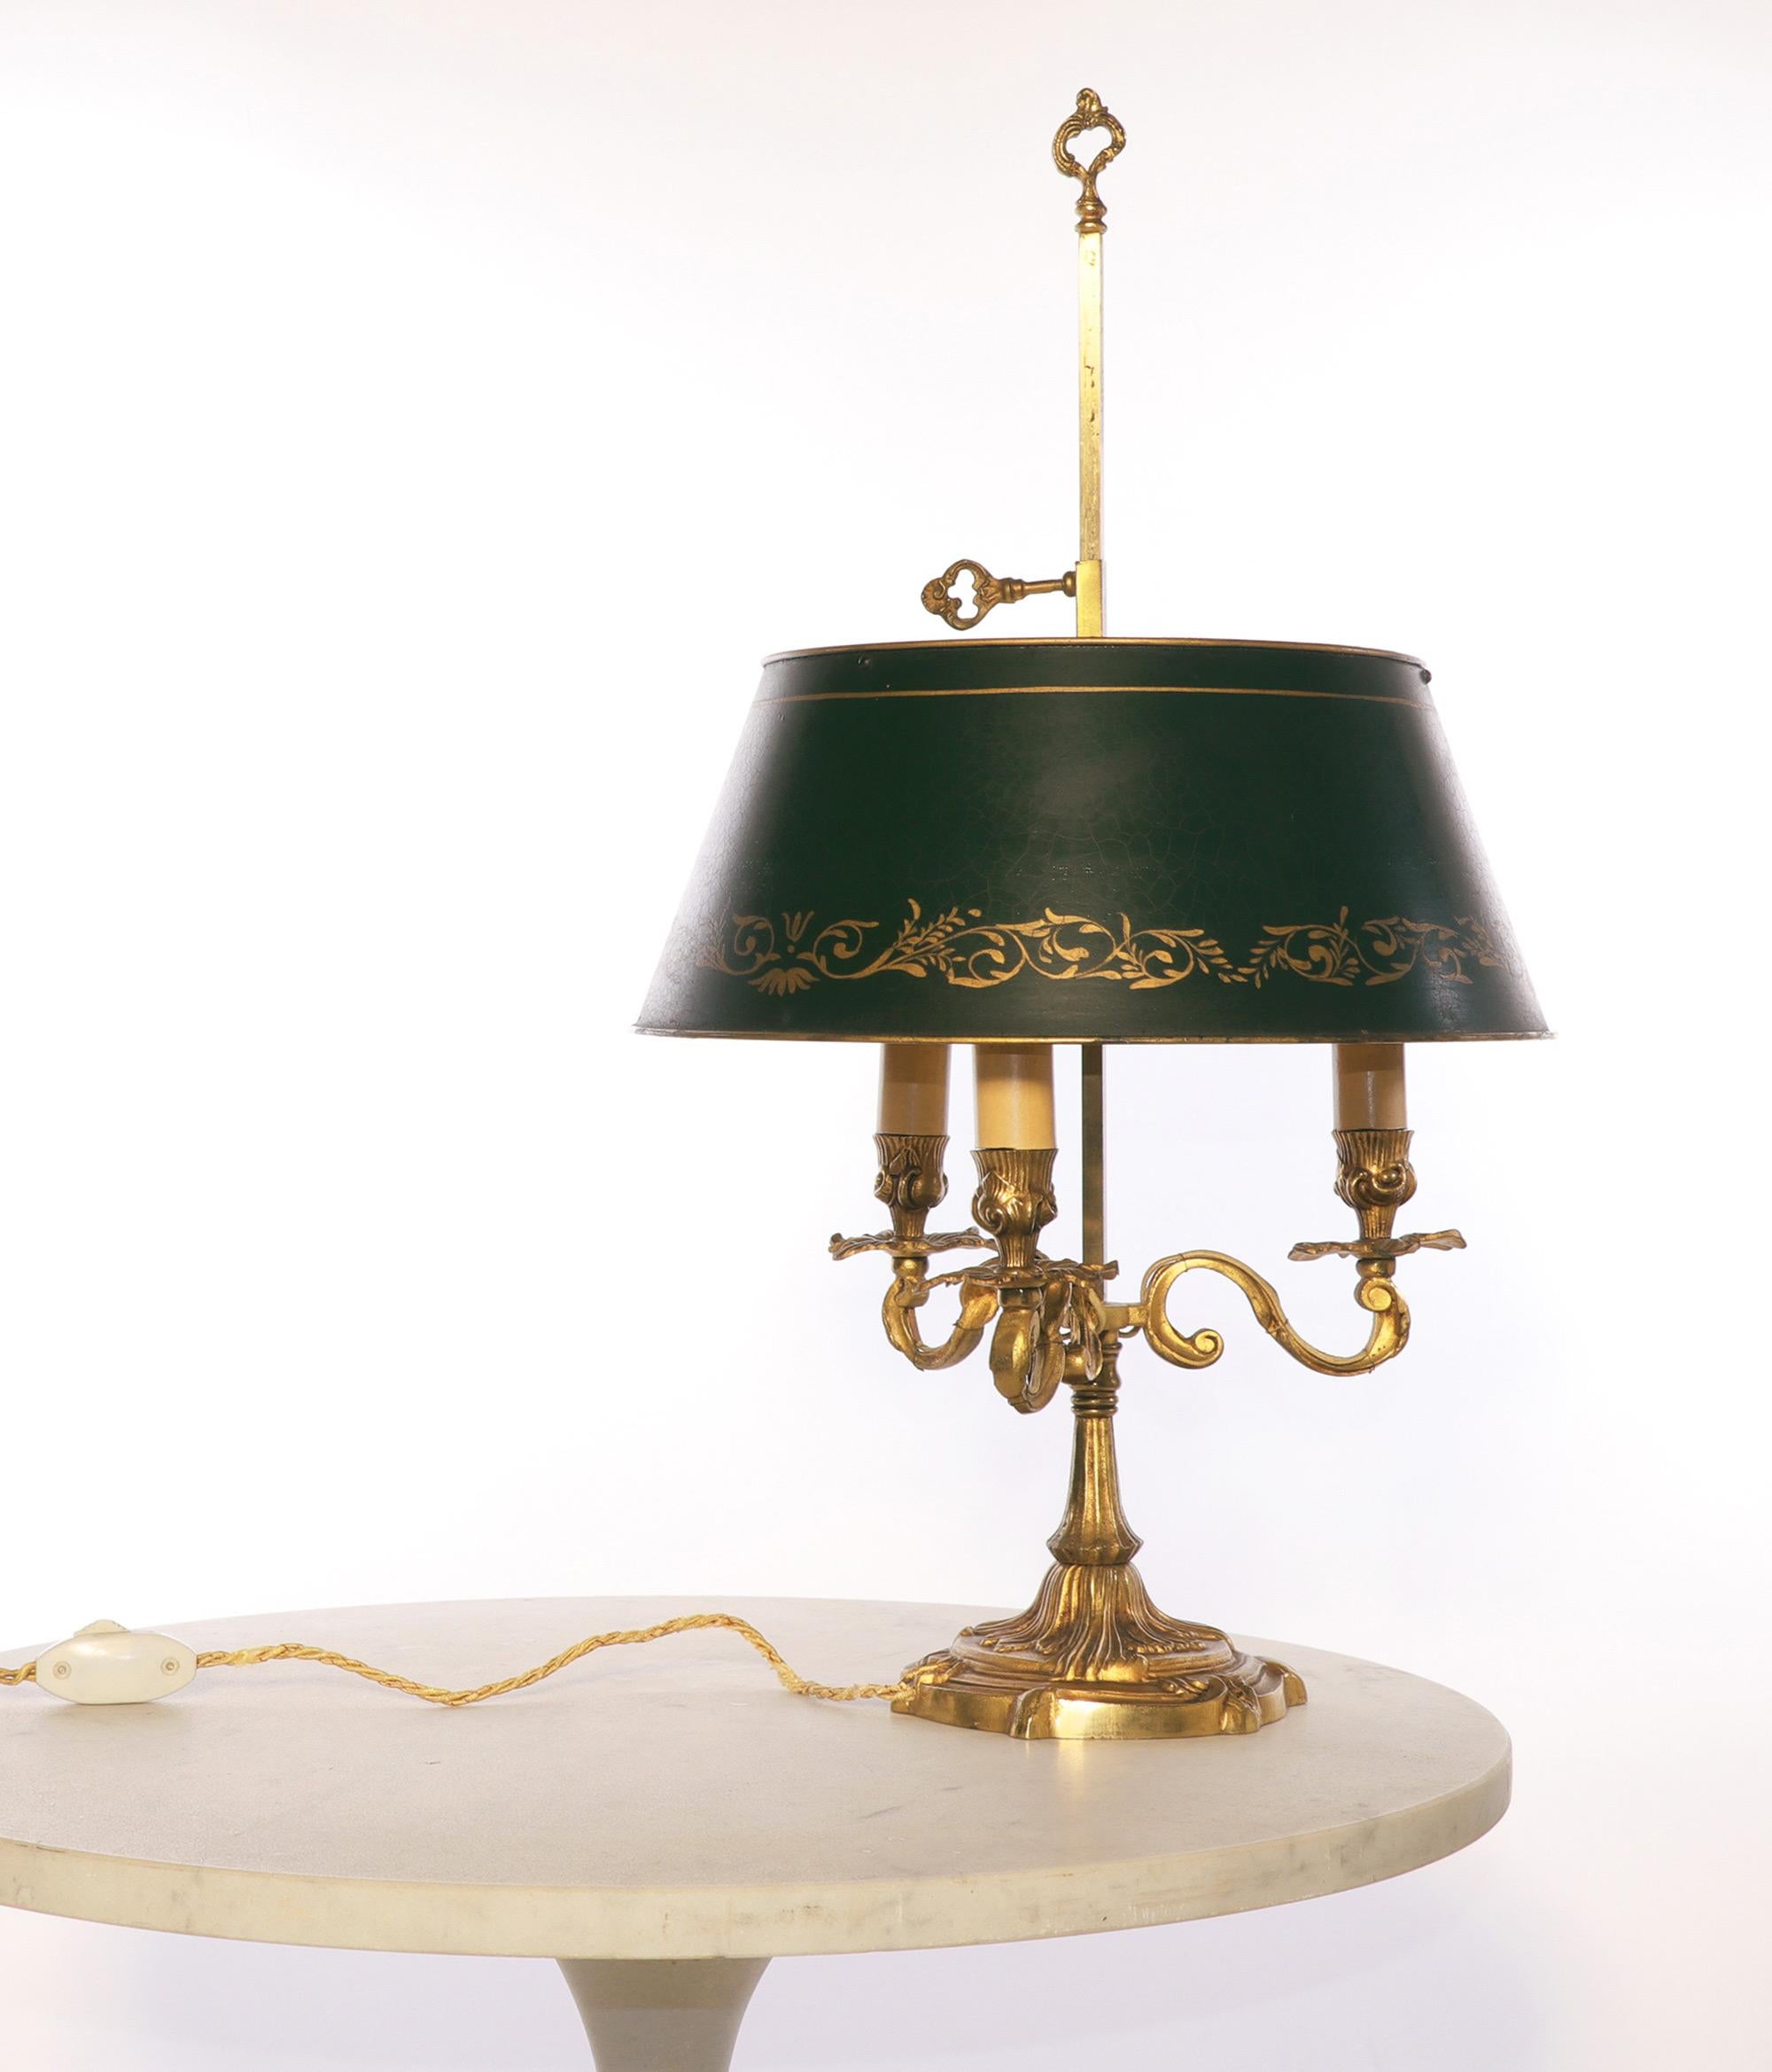 French Gilt Bronze Louis XV Style Bouillotte Lamp, 19th Century (19. Jahrhundert)